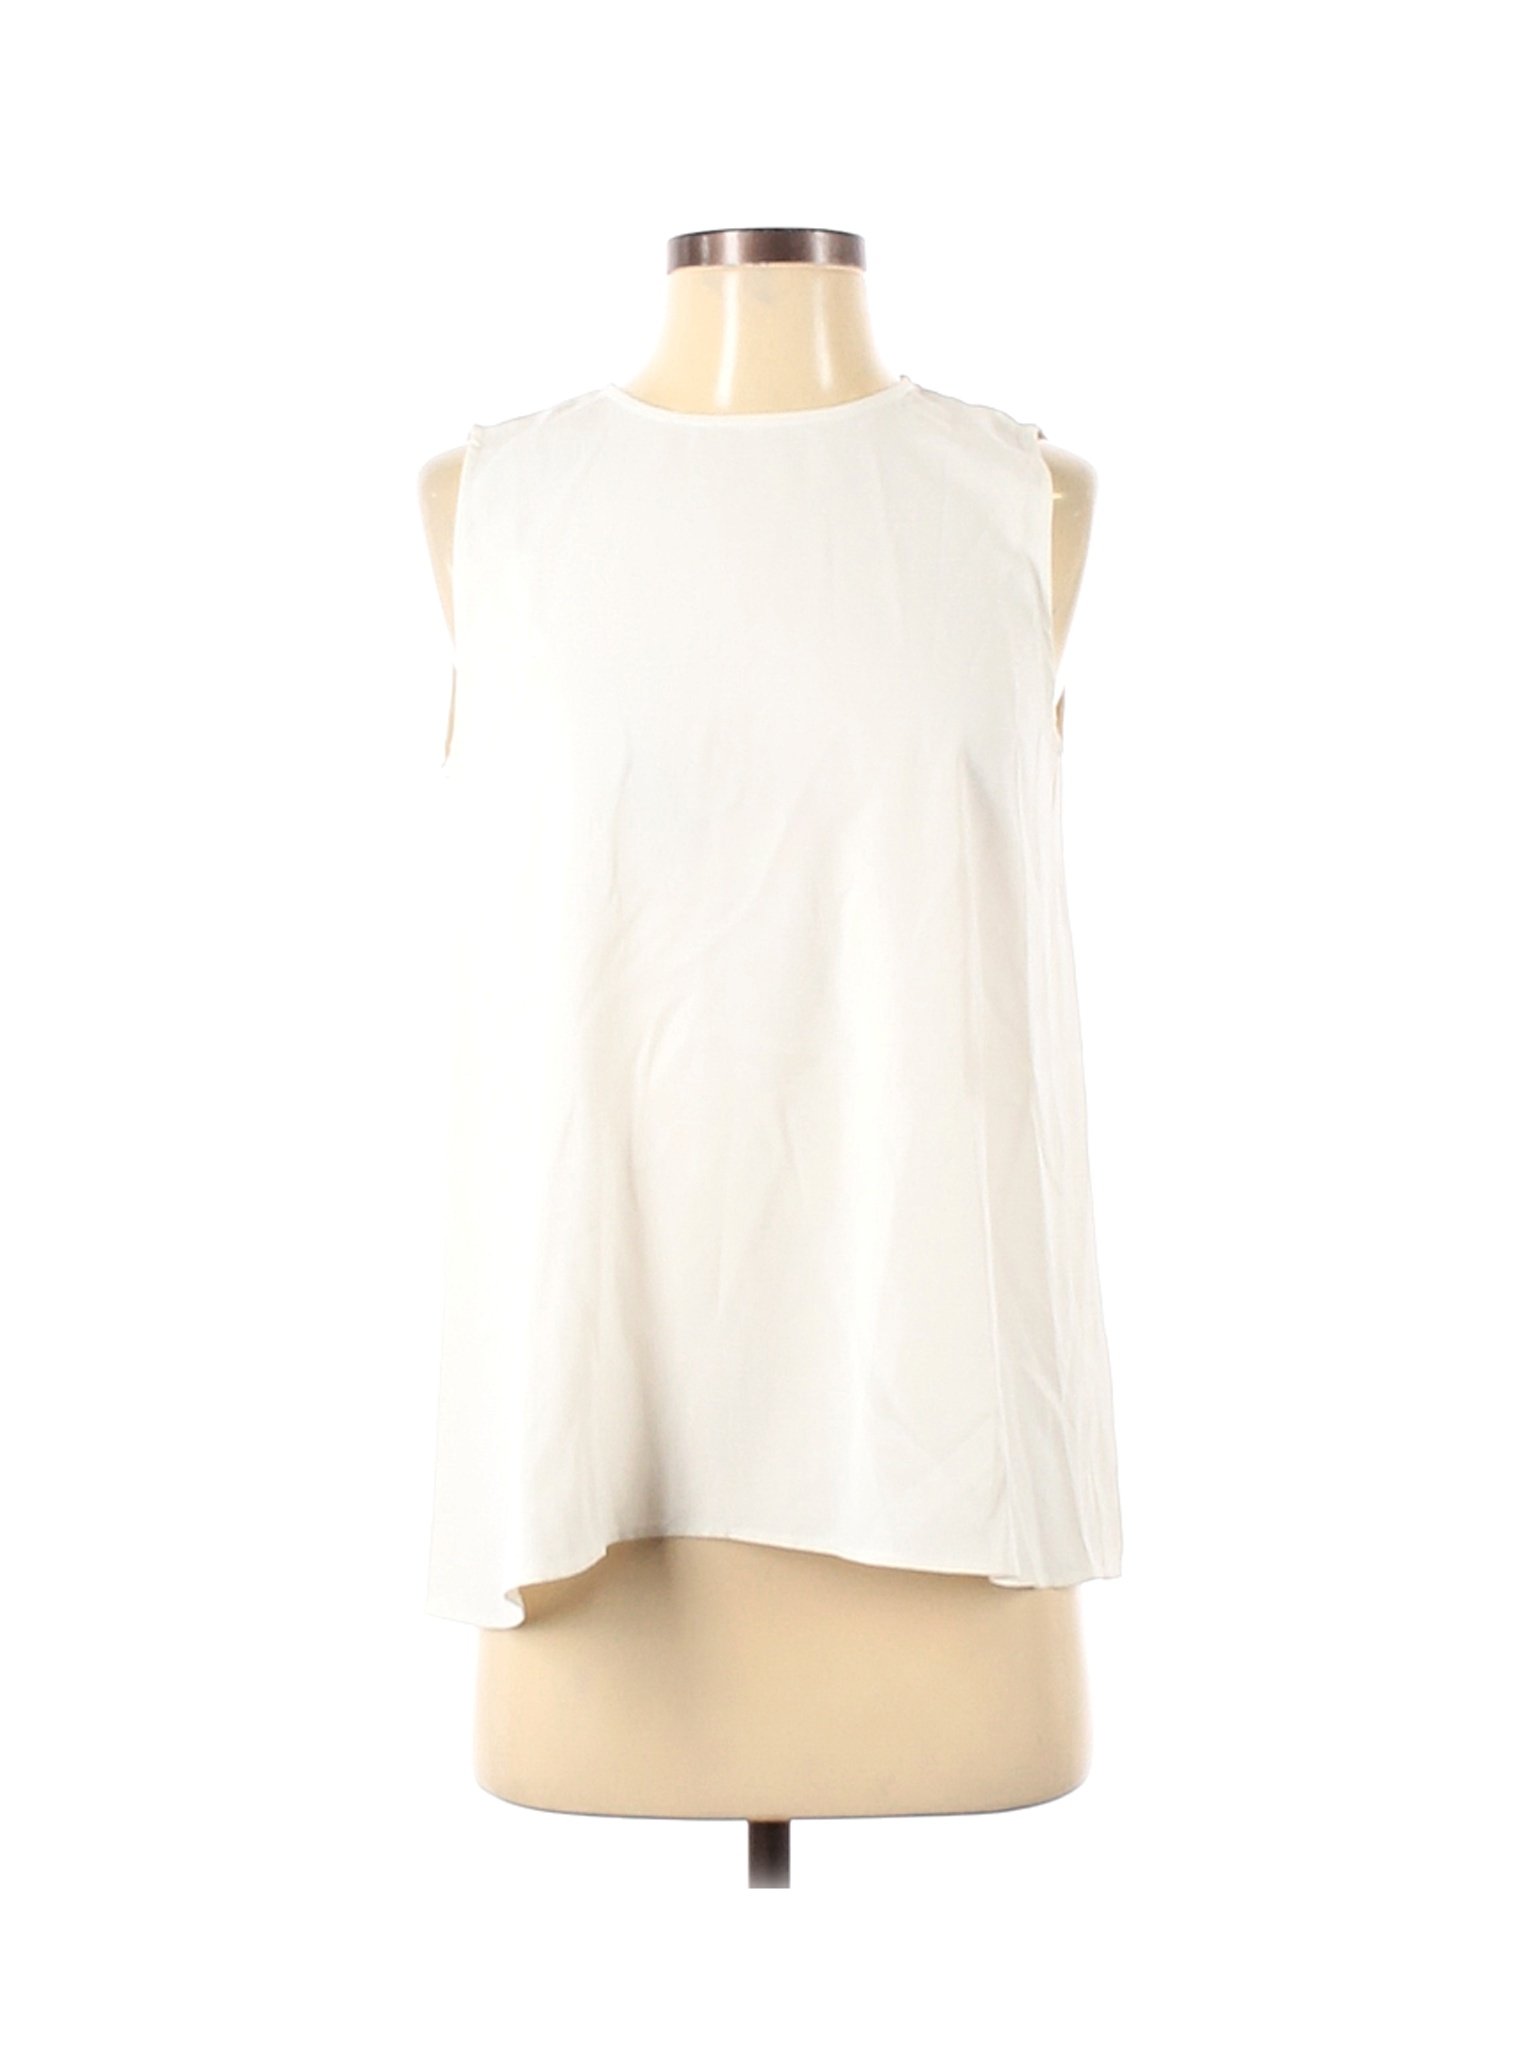 Uniqlo Women White Sleeveless Blouse S | eBay